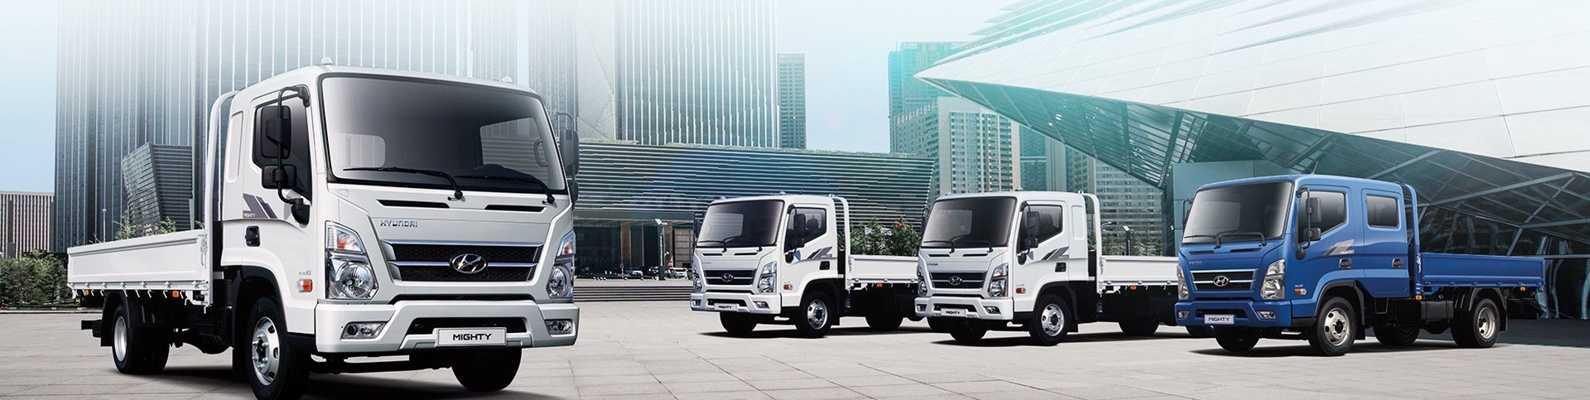 Hyundai porter: технические характеристики